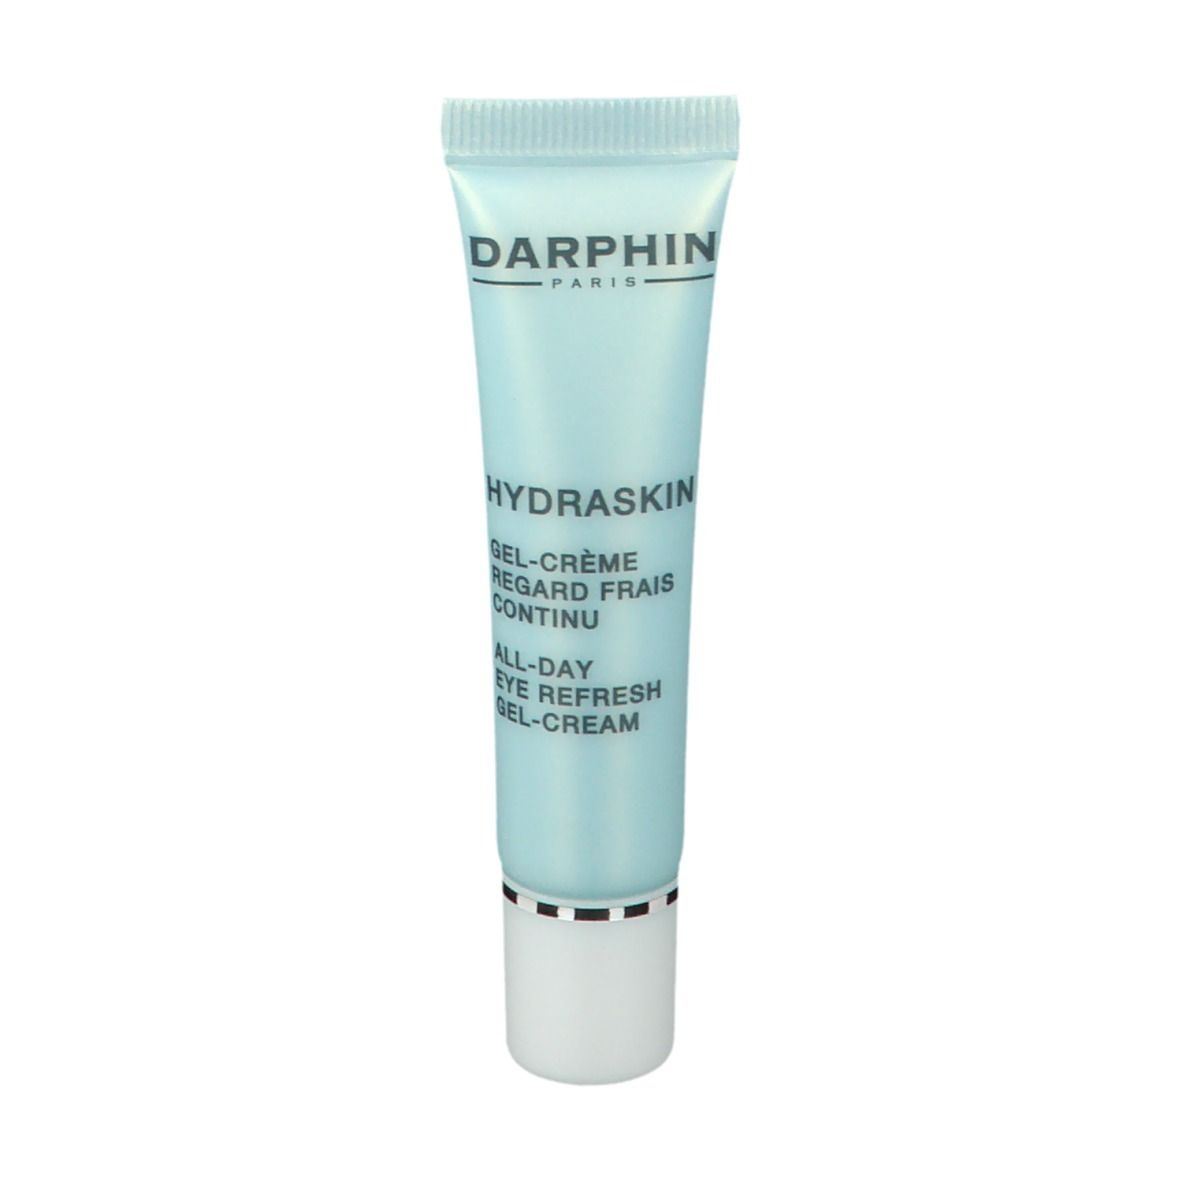 Image of DARPHIN HYDRASKIN All-day Eye Refresh Gel-Cream